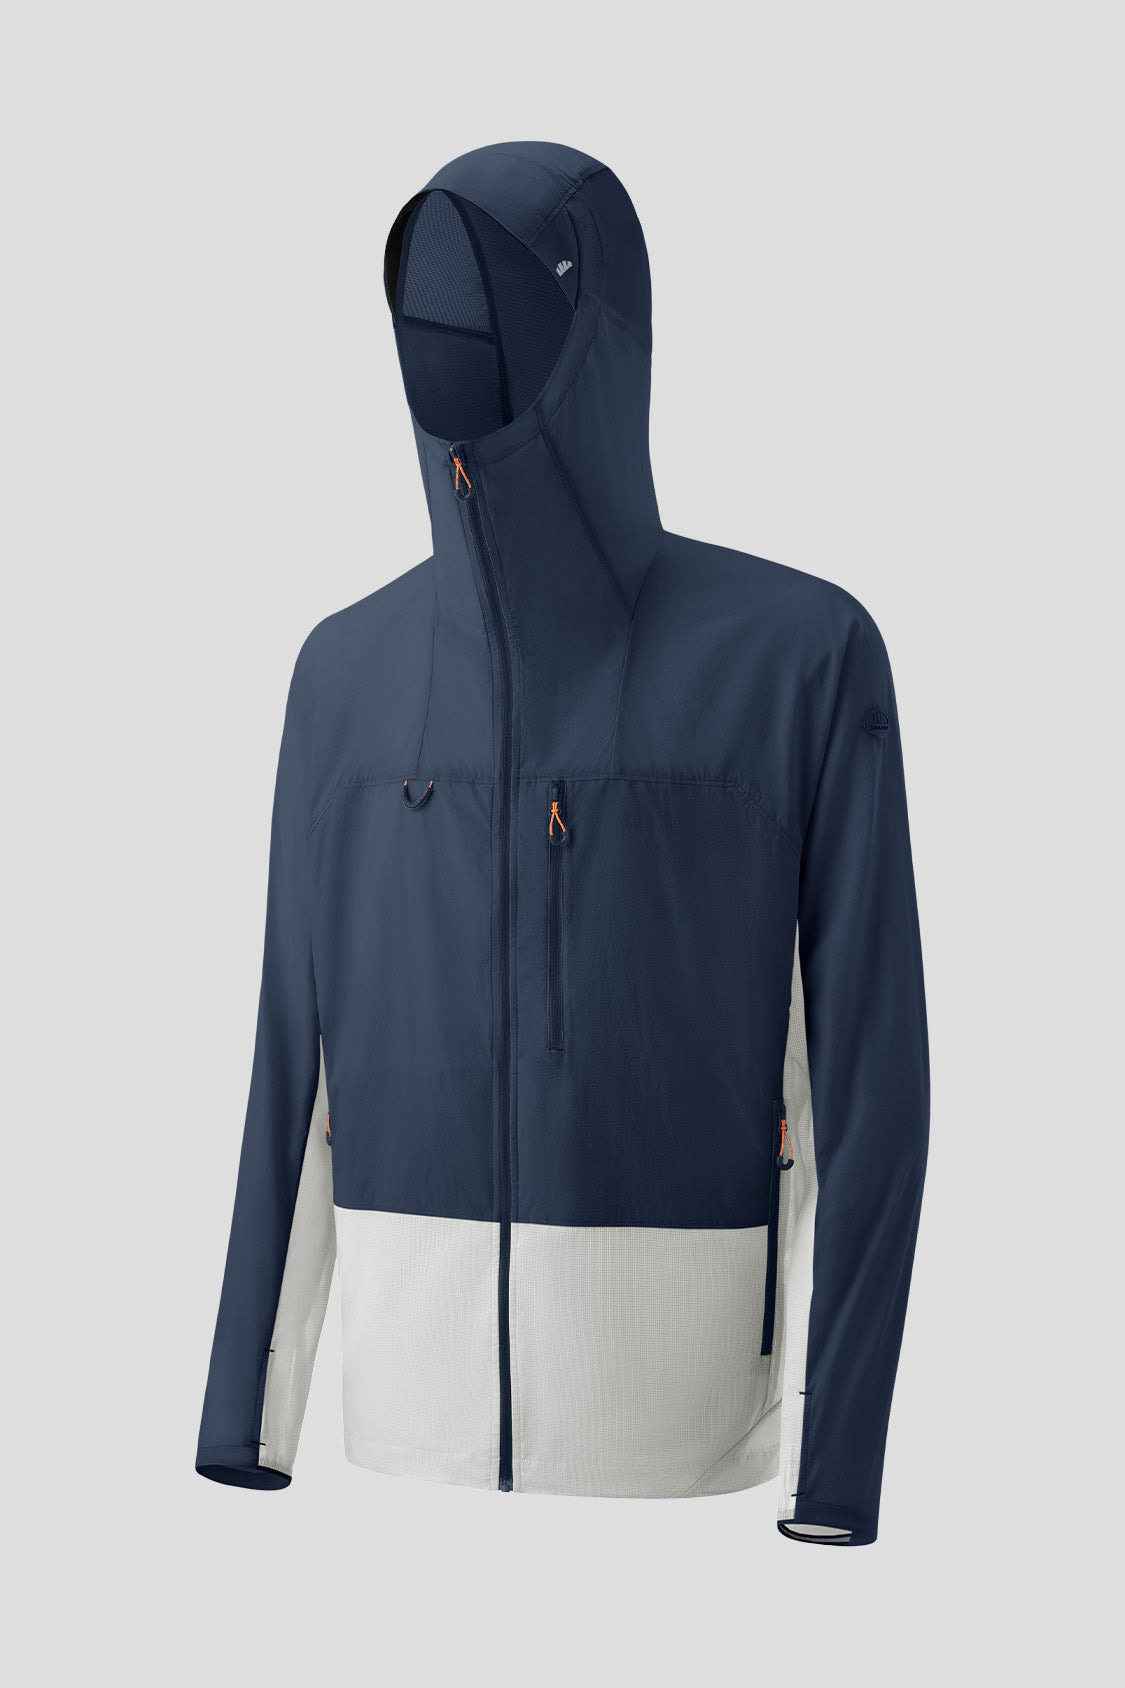 beneunder men's sun protection jacket upf50+ #color_moonlit night blue - galaxy gray